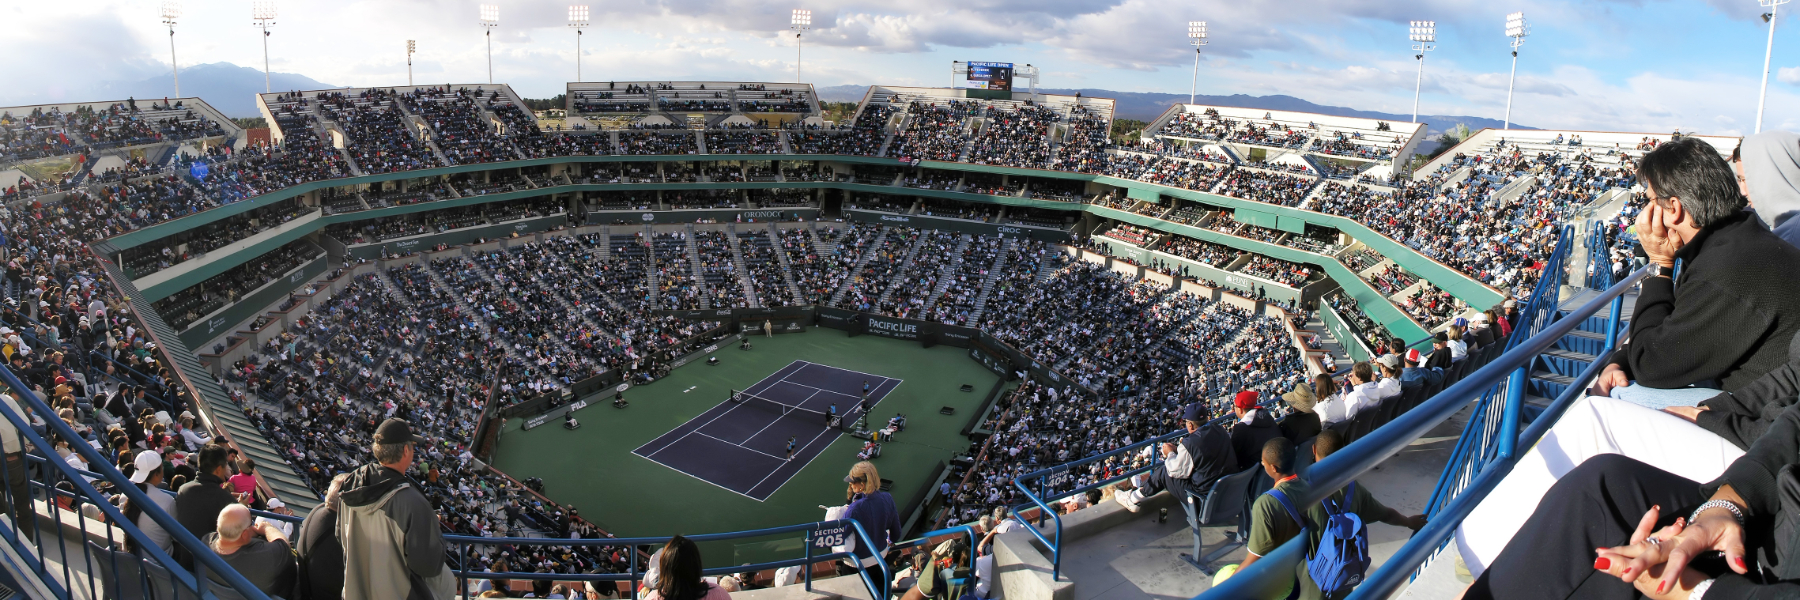 Indian Wells e Miami: i Masters 1000 americani partono senza Djokovic